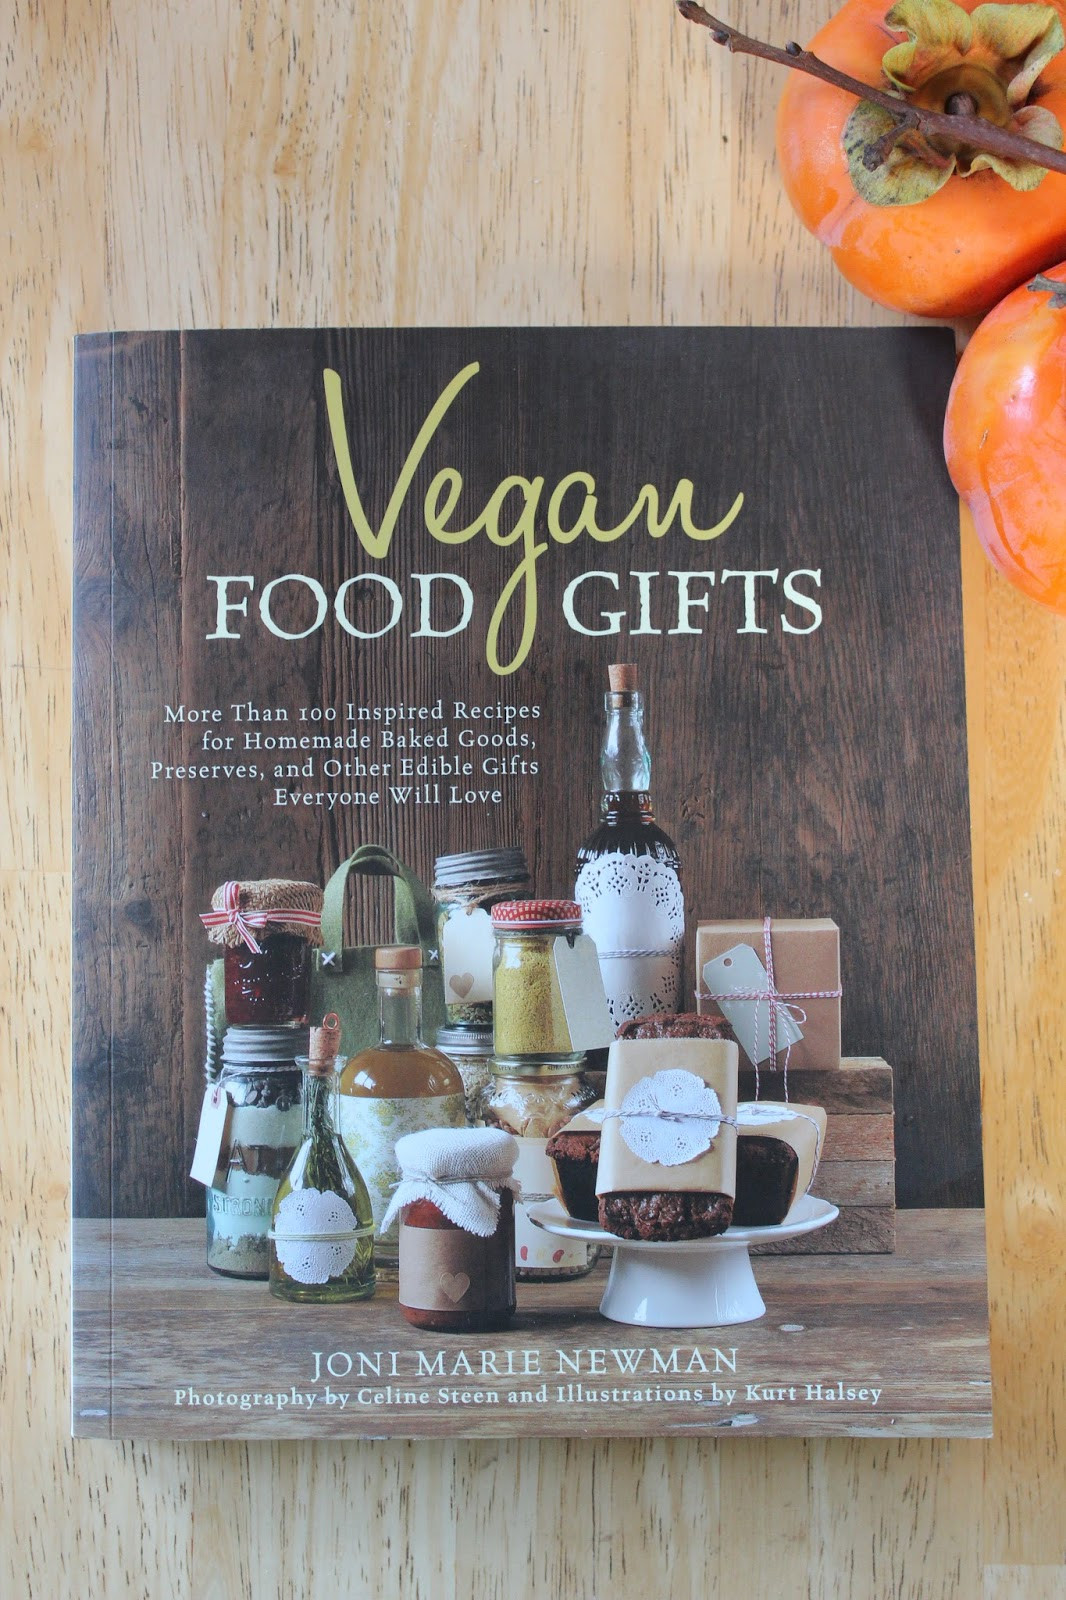 Vegan Christmas Gift Ideas
 Vegan Eats and Treats Holiday Gift Ideas & "Vegan Food